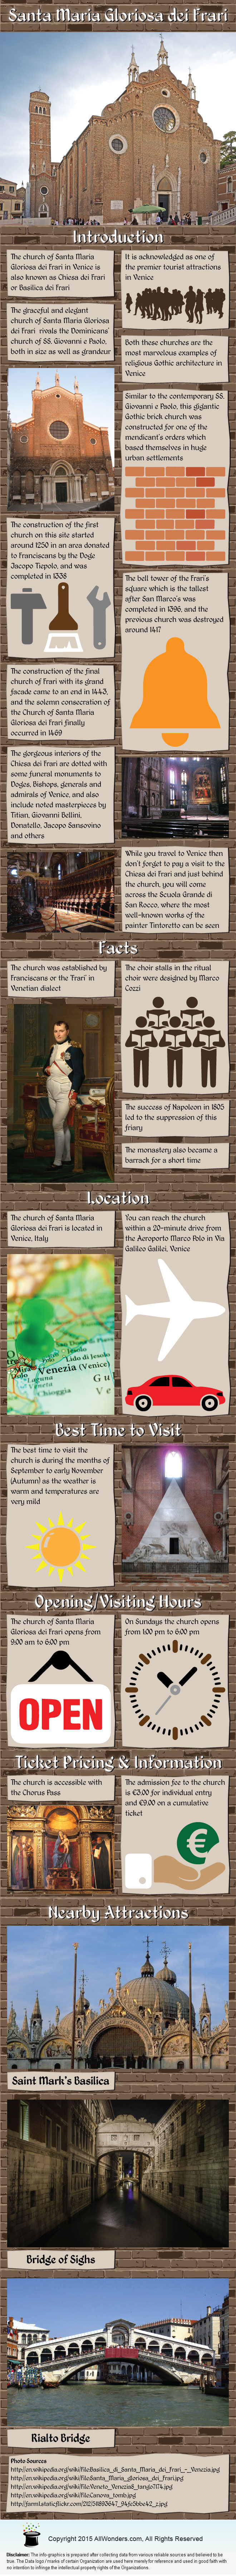 Santa Maria Gloriosa dei Frari Infographic